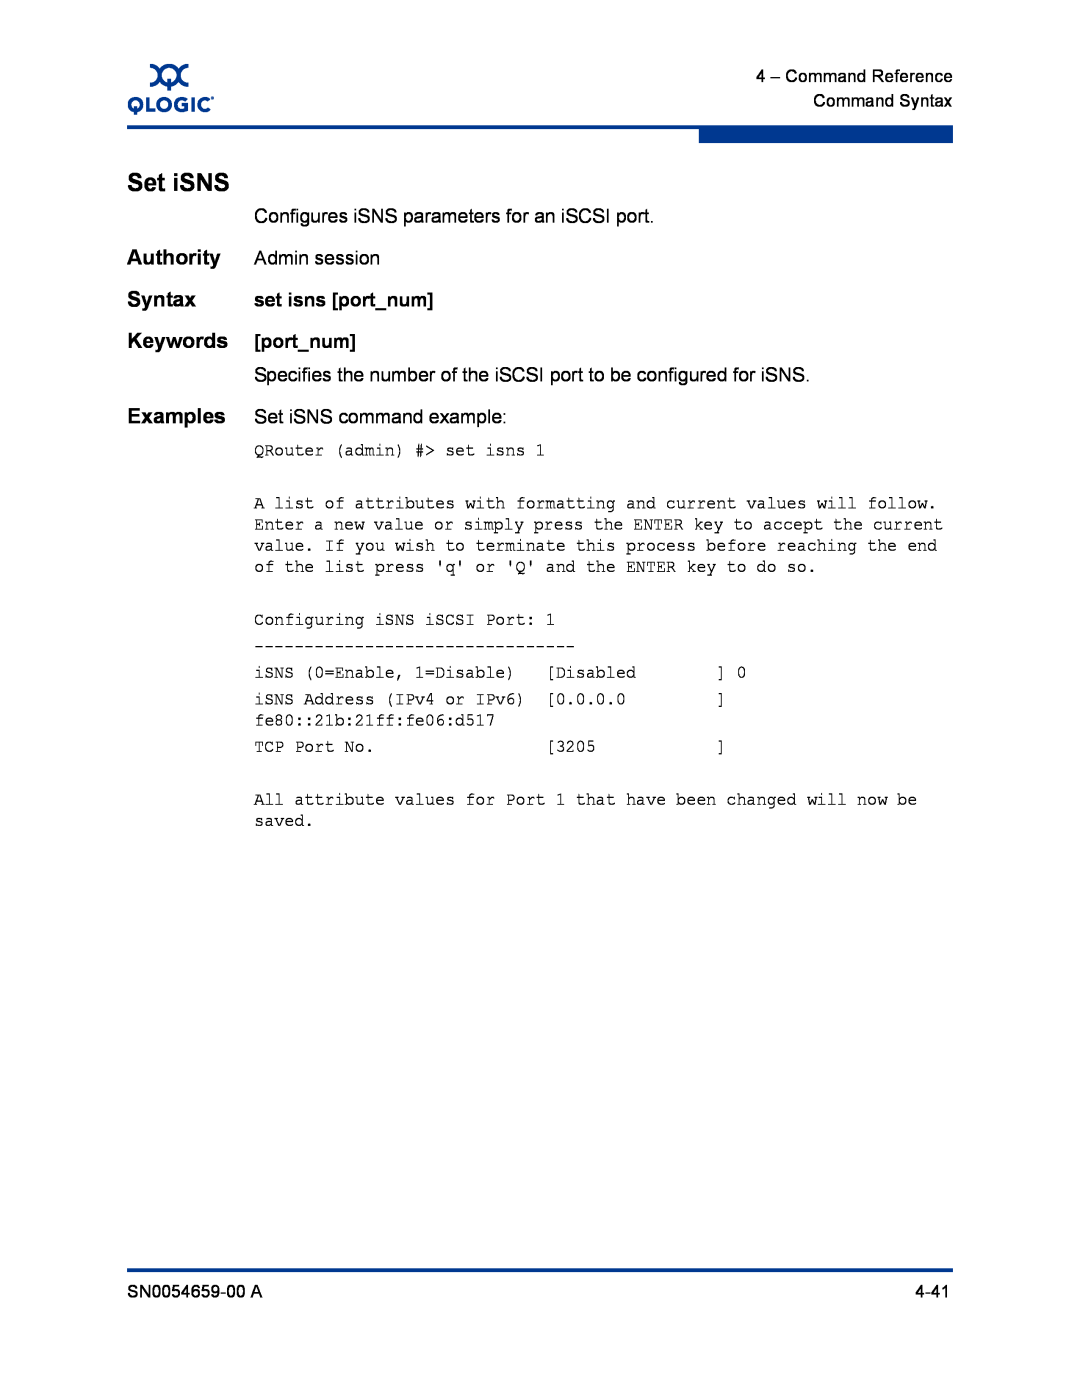 Q-Logic ISR6142 manual Set iSNS, Authority, Syntax, Keywords, Examples 